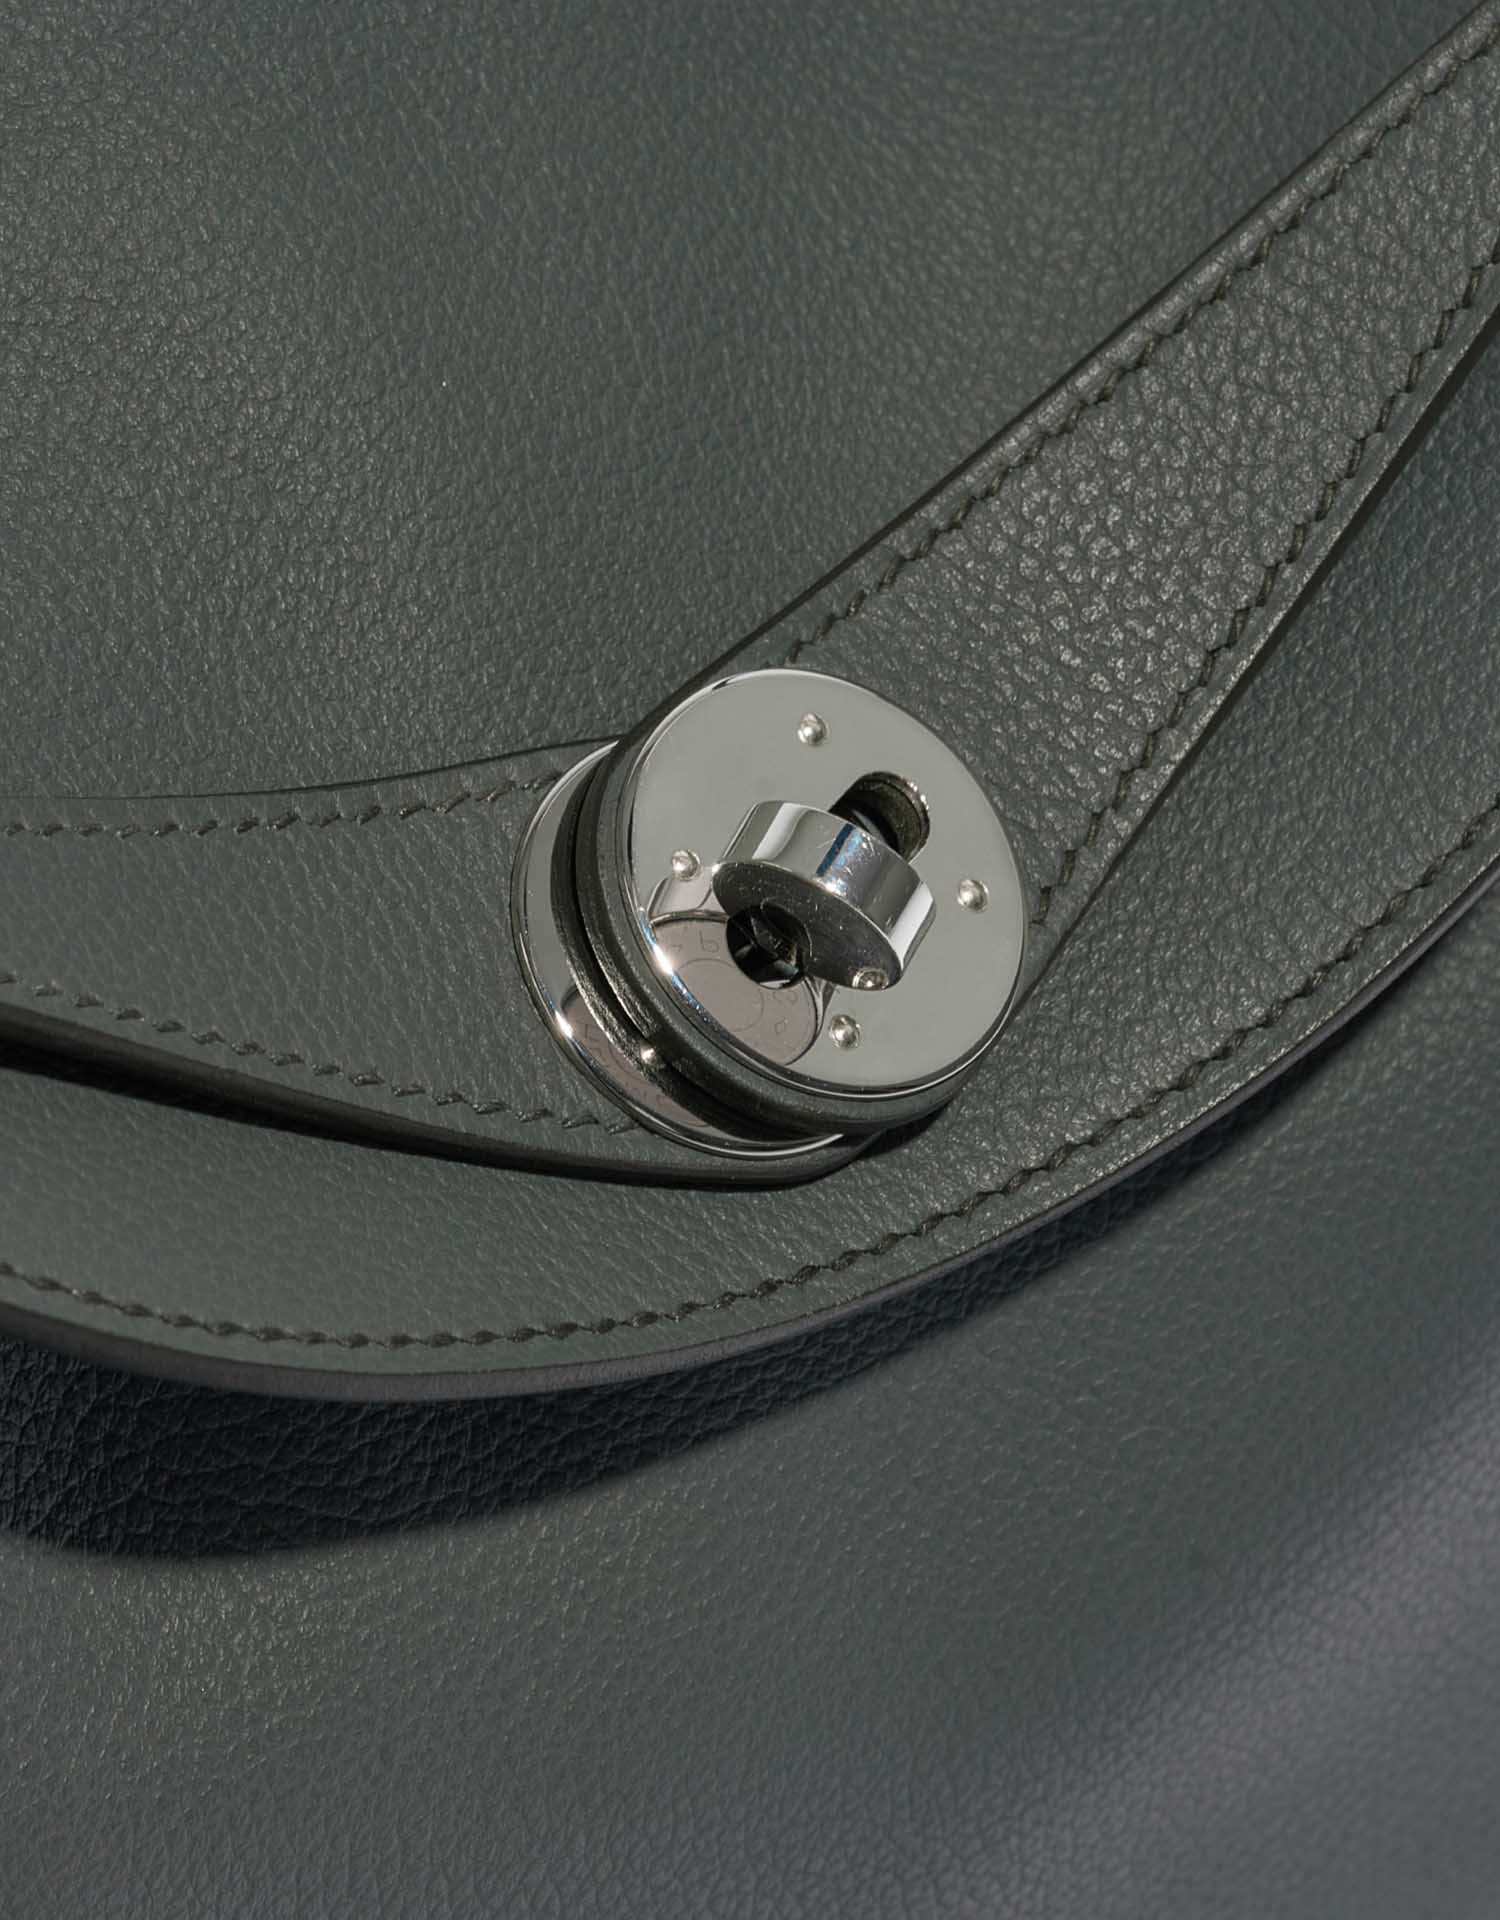 Replica Hermes Lindy 26 Handmade Bag In Vert Amande Evercolor Leather